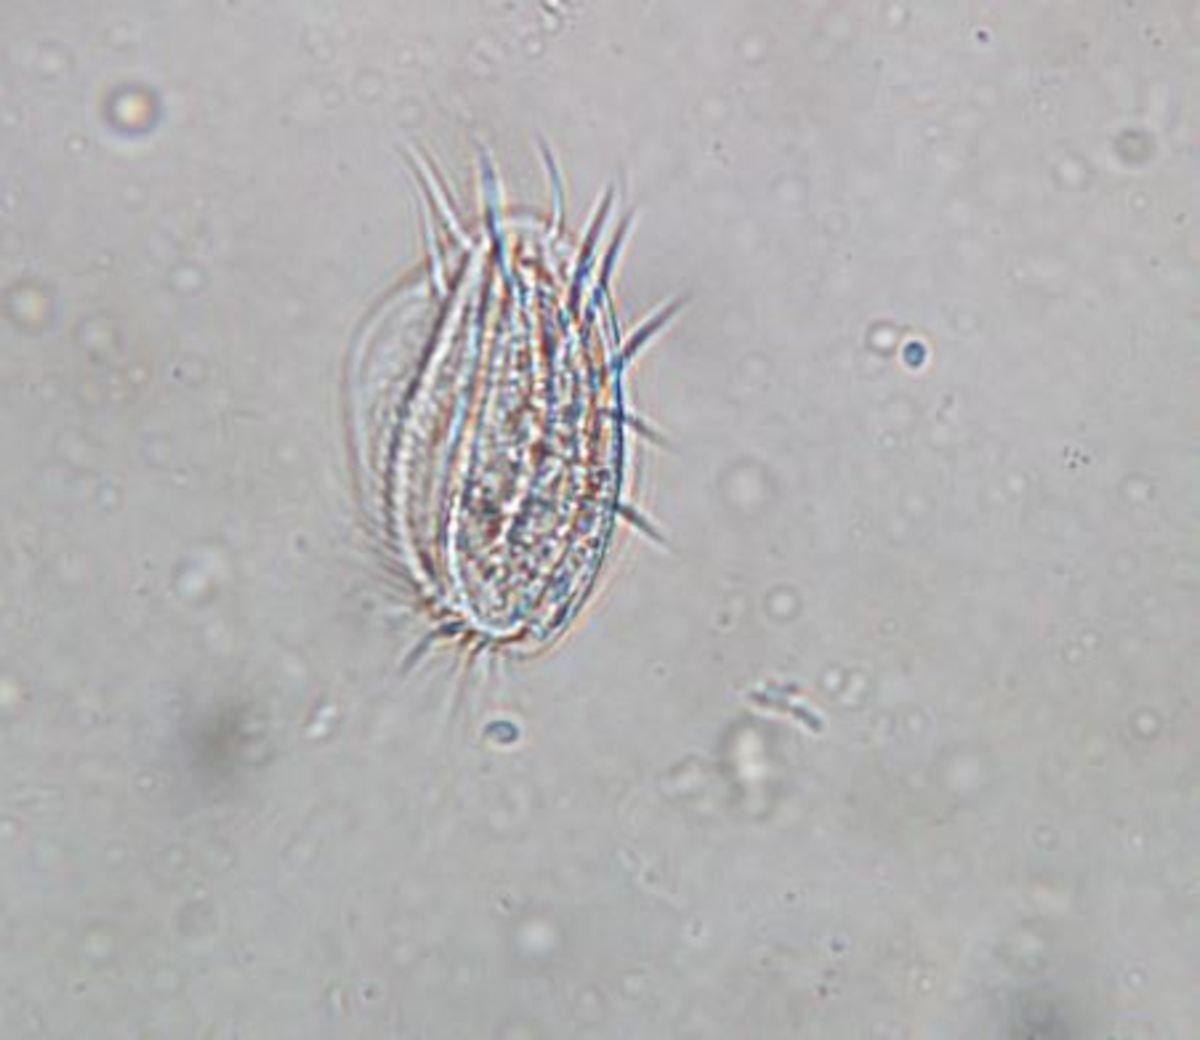 Euplotes sp., a ciliated protozoan found in the pools of Brocchinia and Sarracenia